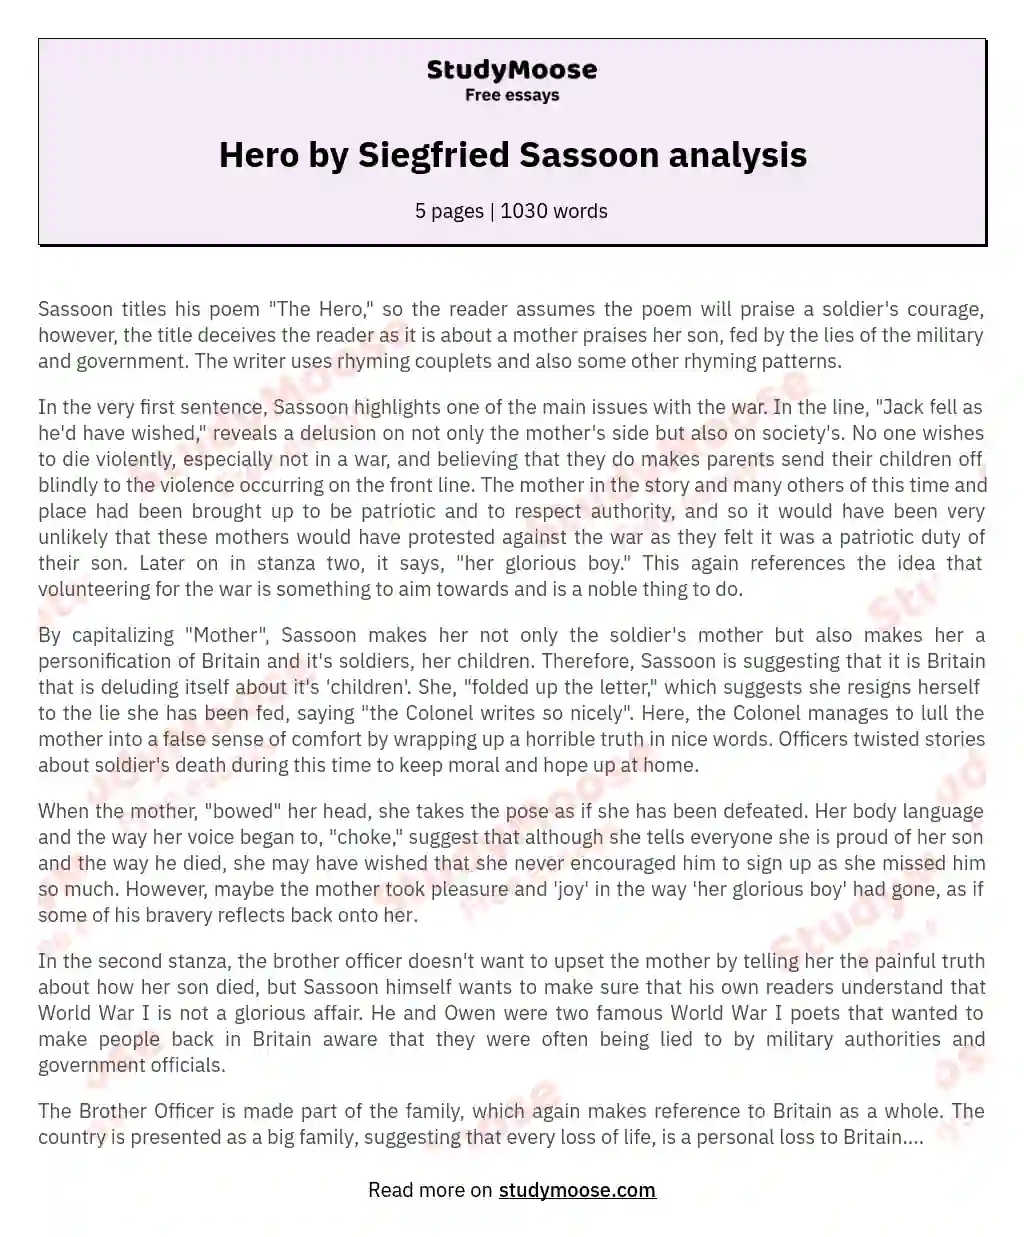 Hero by Siegfried Sassoon analysis essay